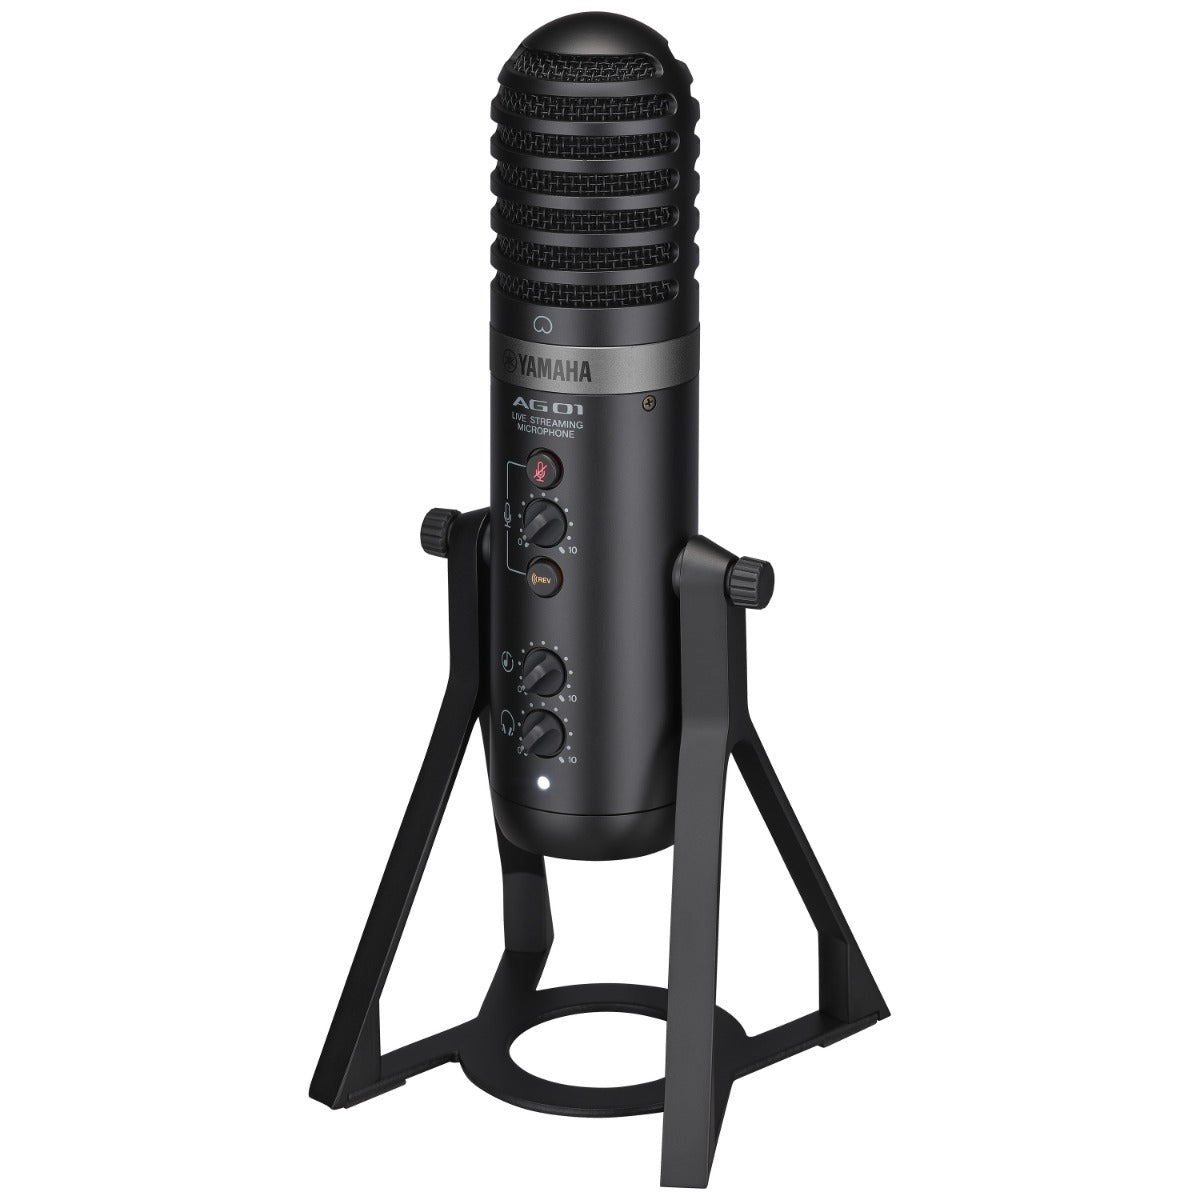 Yamaha AG01 Live Streaming USB Microphone - Black view 1